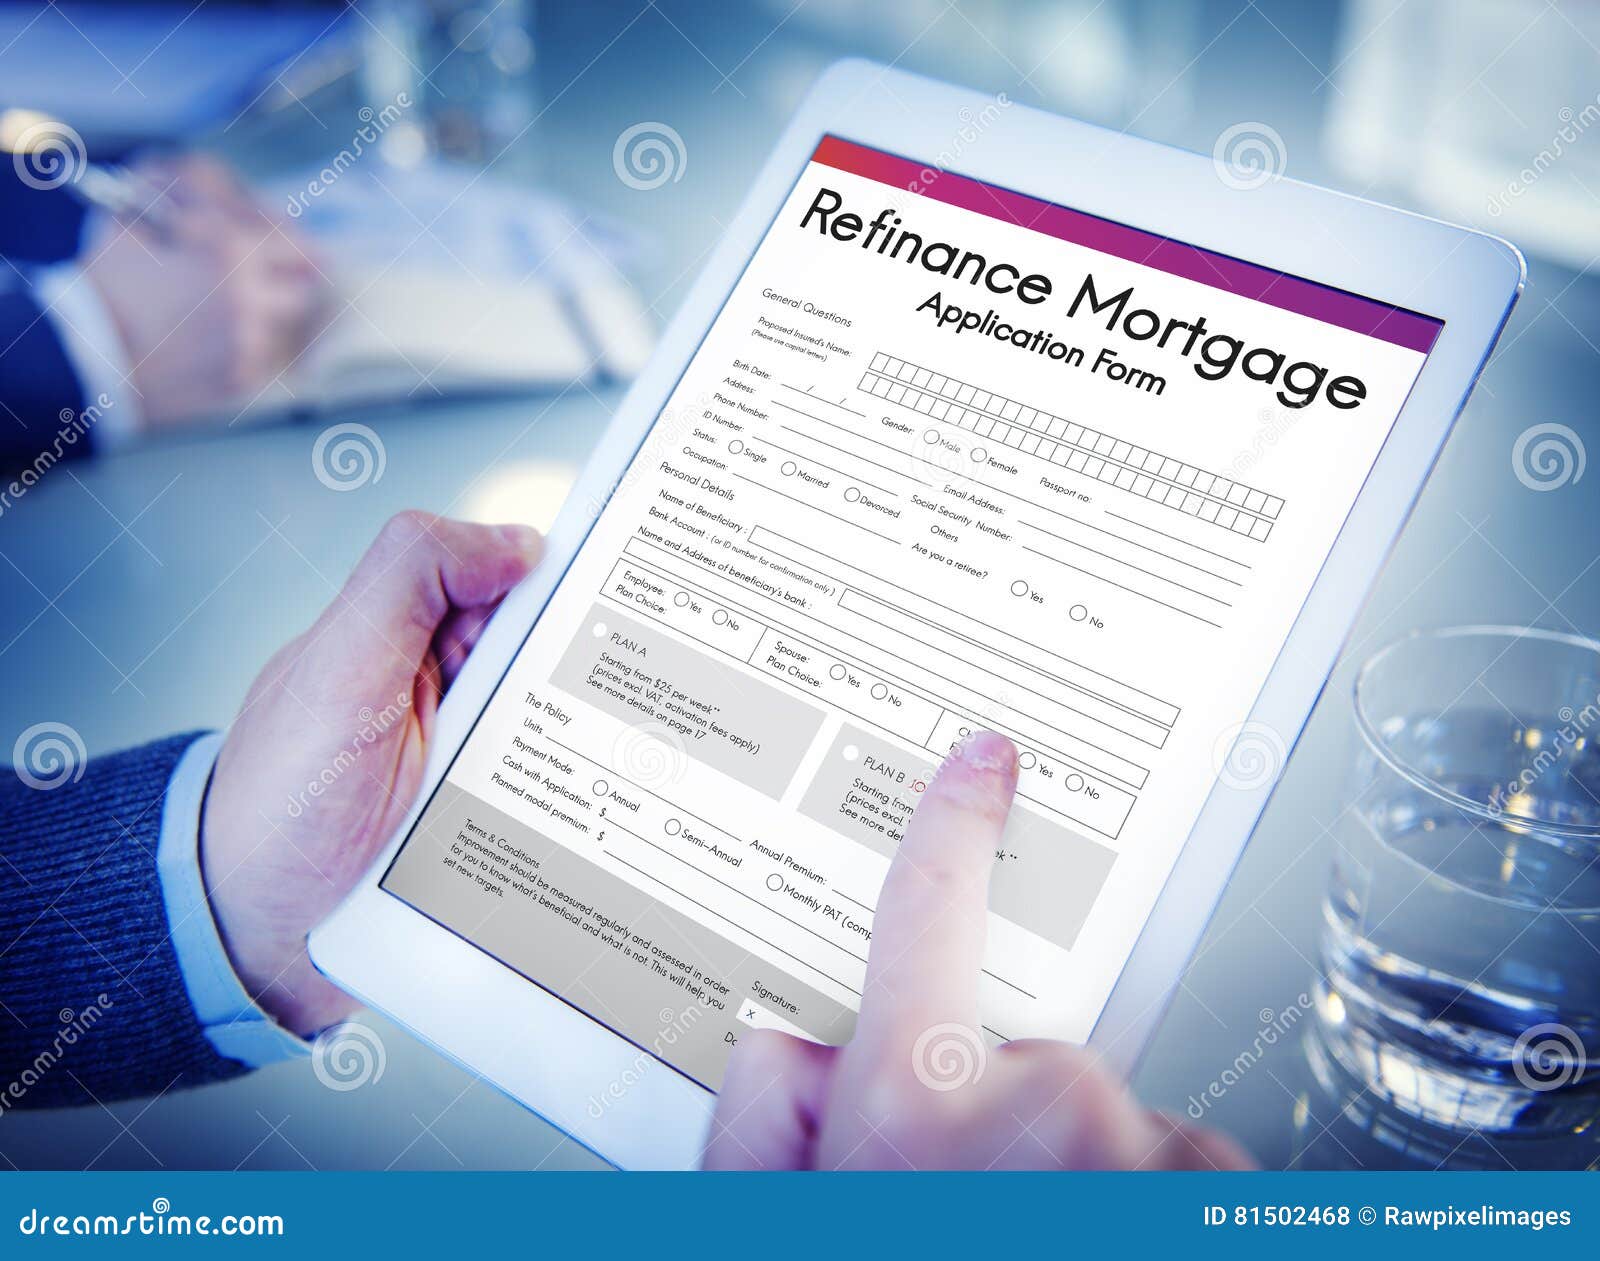 refinance mortgage application form concept